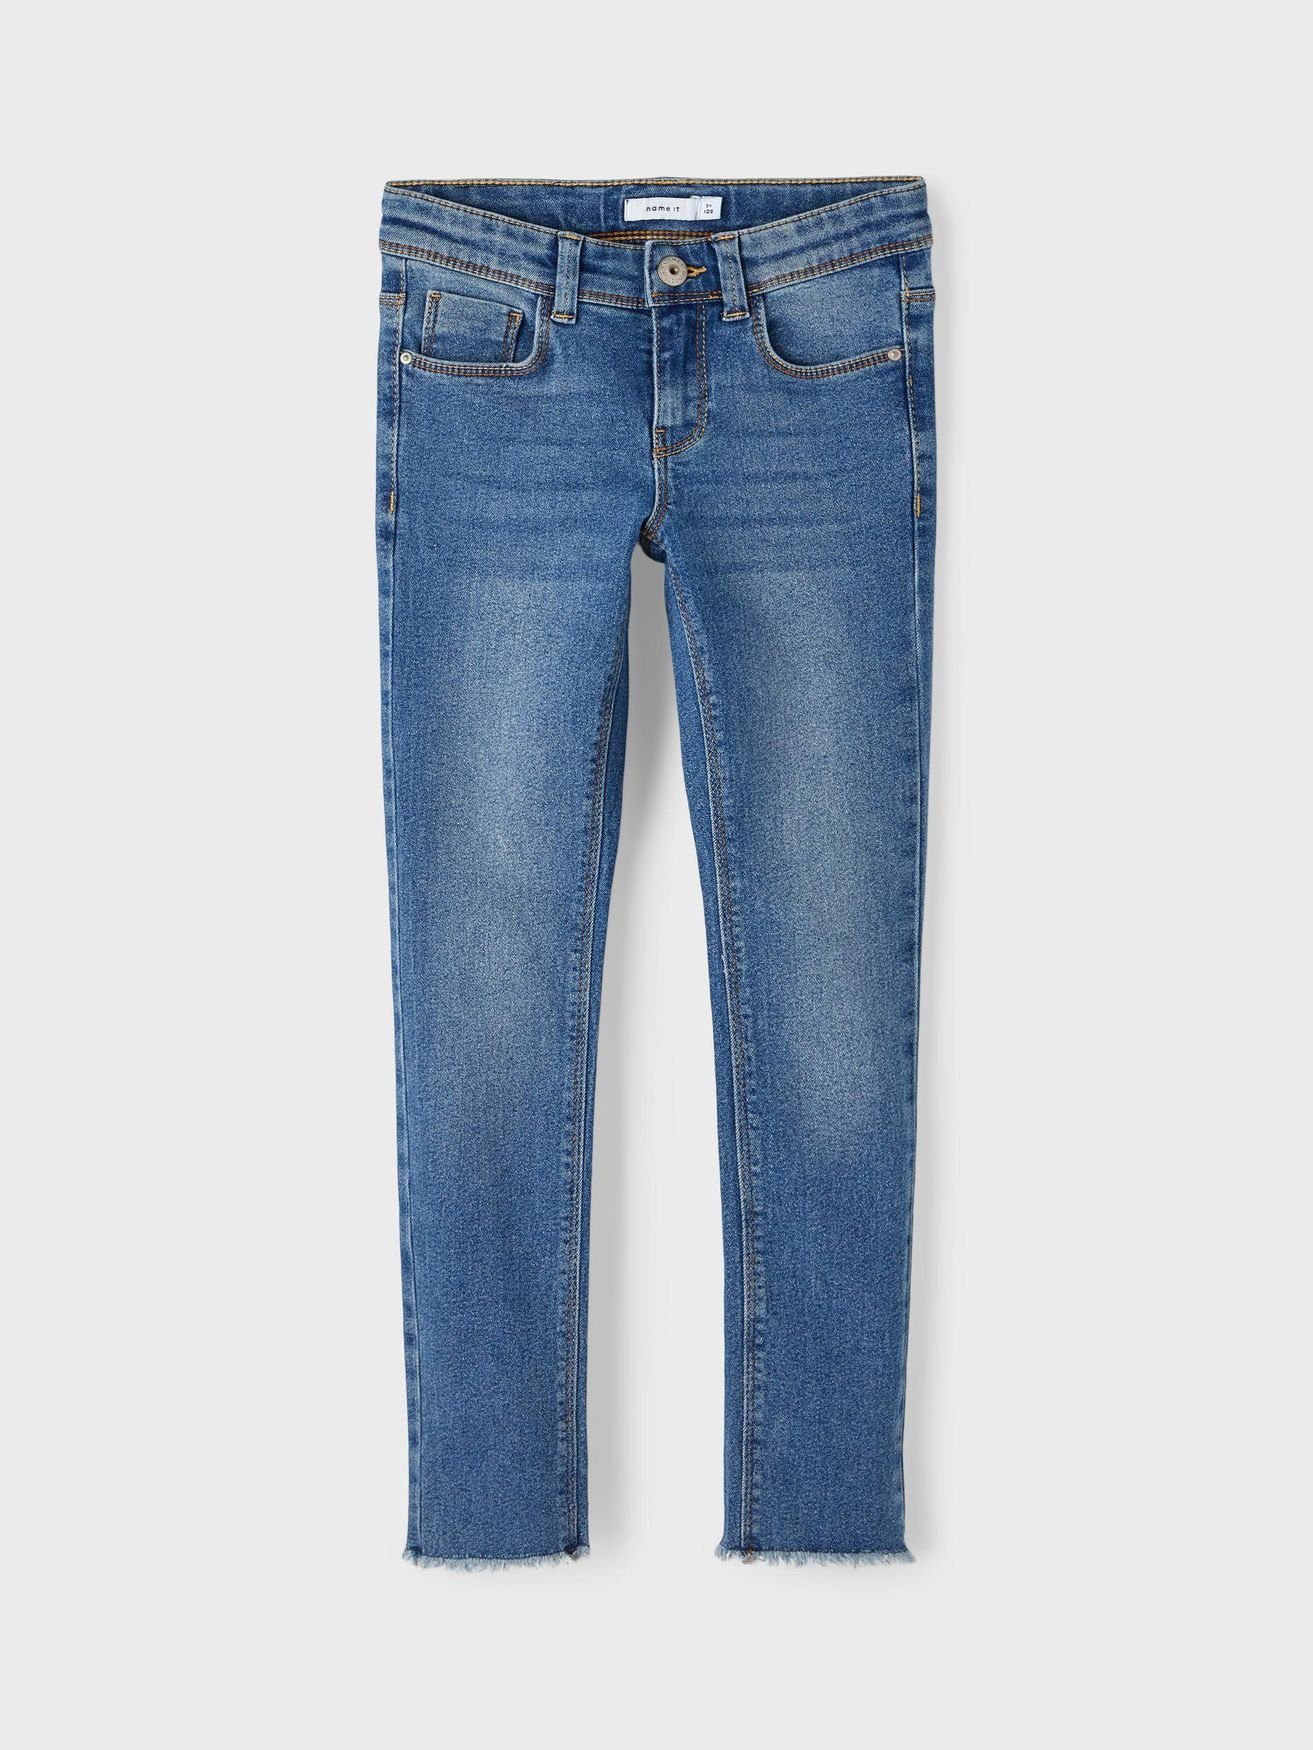 It NKFPOLLY 75% Skinny Hose Baumwolle, 18% mit 1% Blau, 6% Polyester, MATERIAL Name Fransen Viskose, 5538 Jeans Denim in - Regular-fit-Jeans